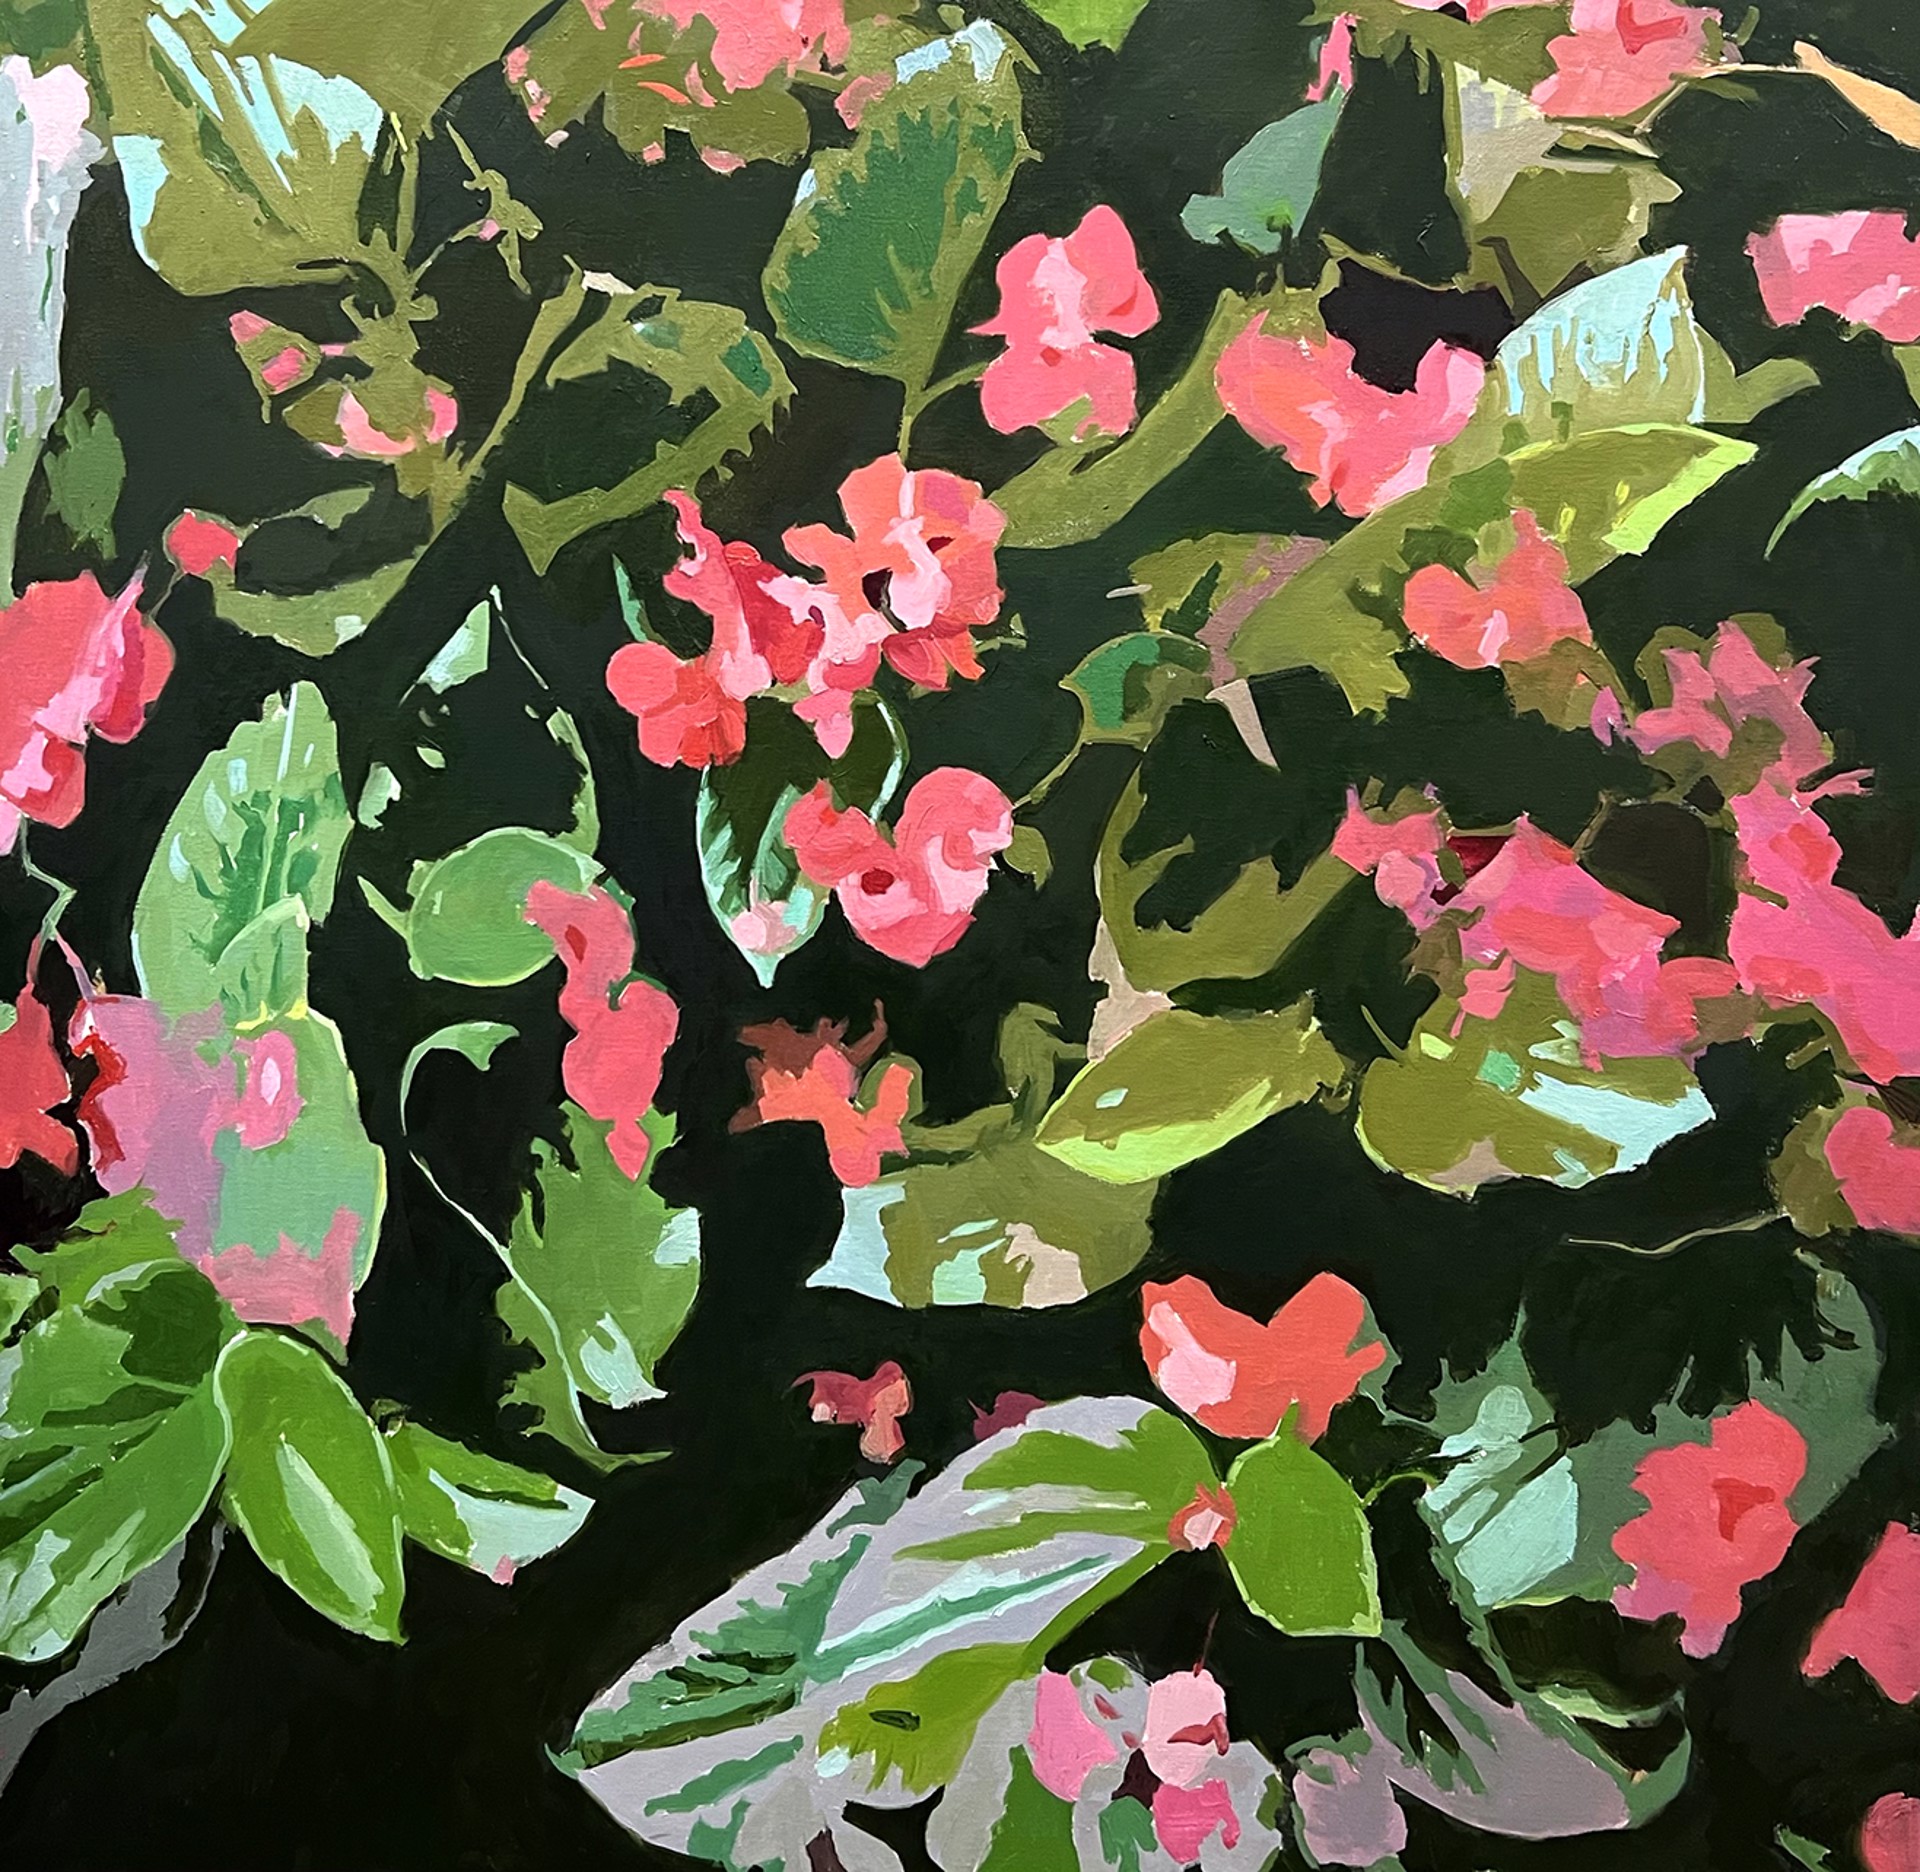 Begonias by Laura Murphey